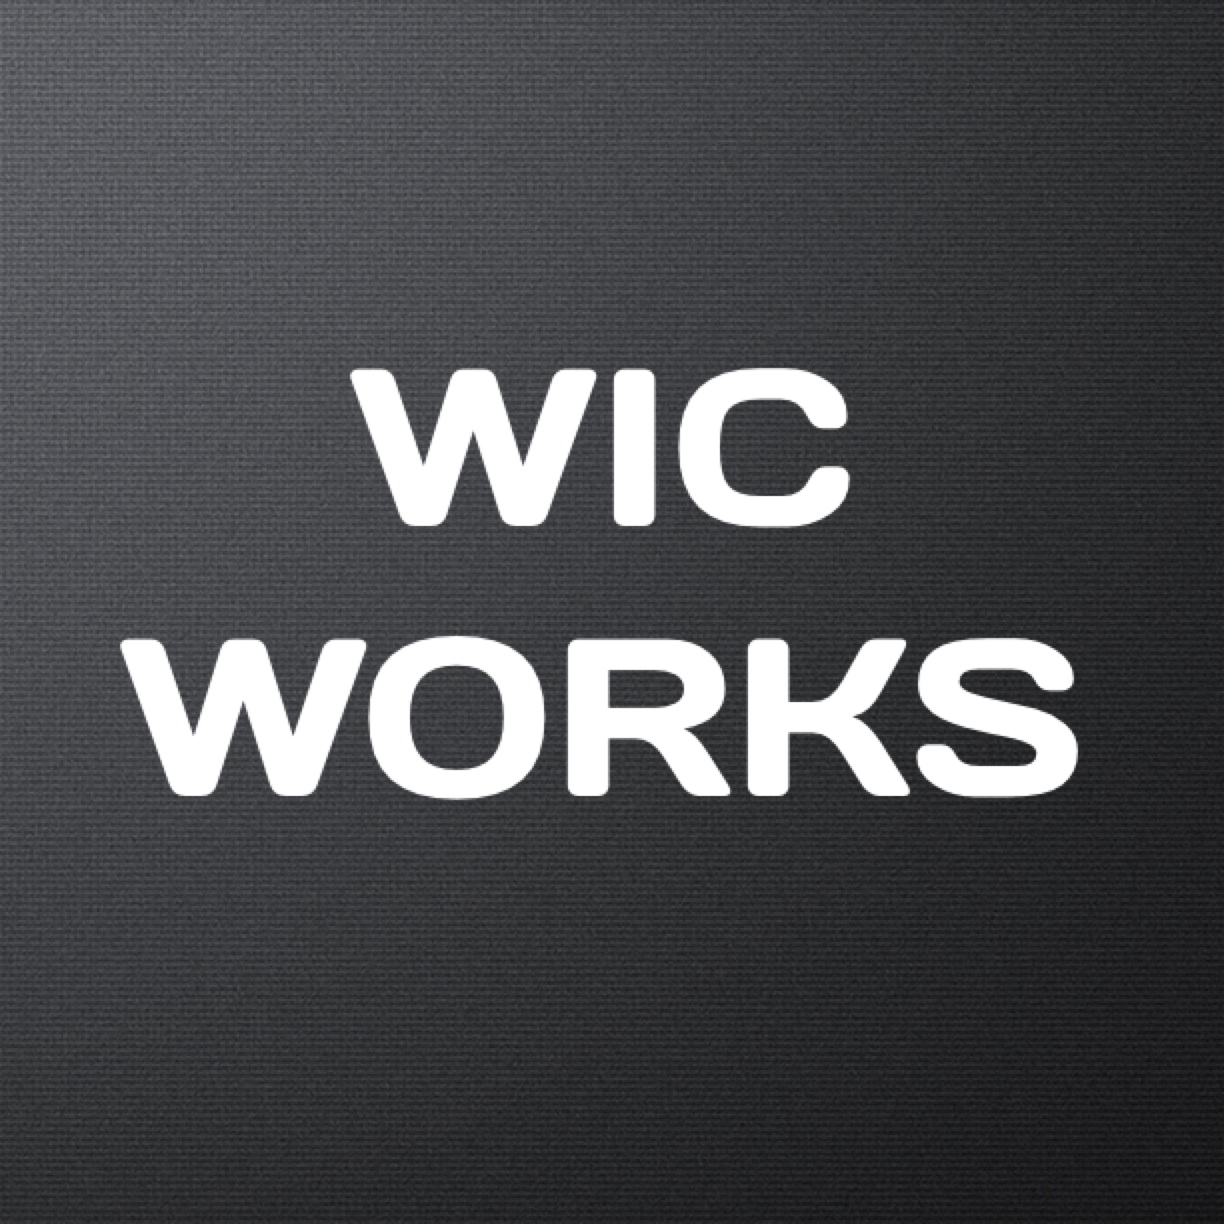 wic-works